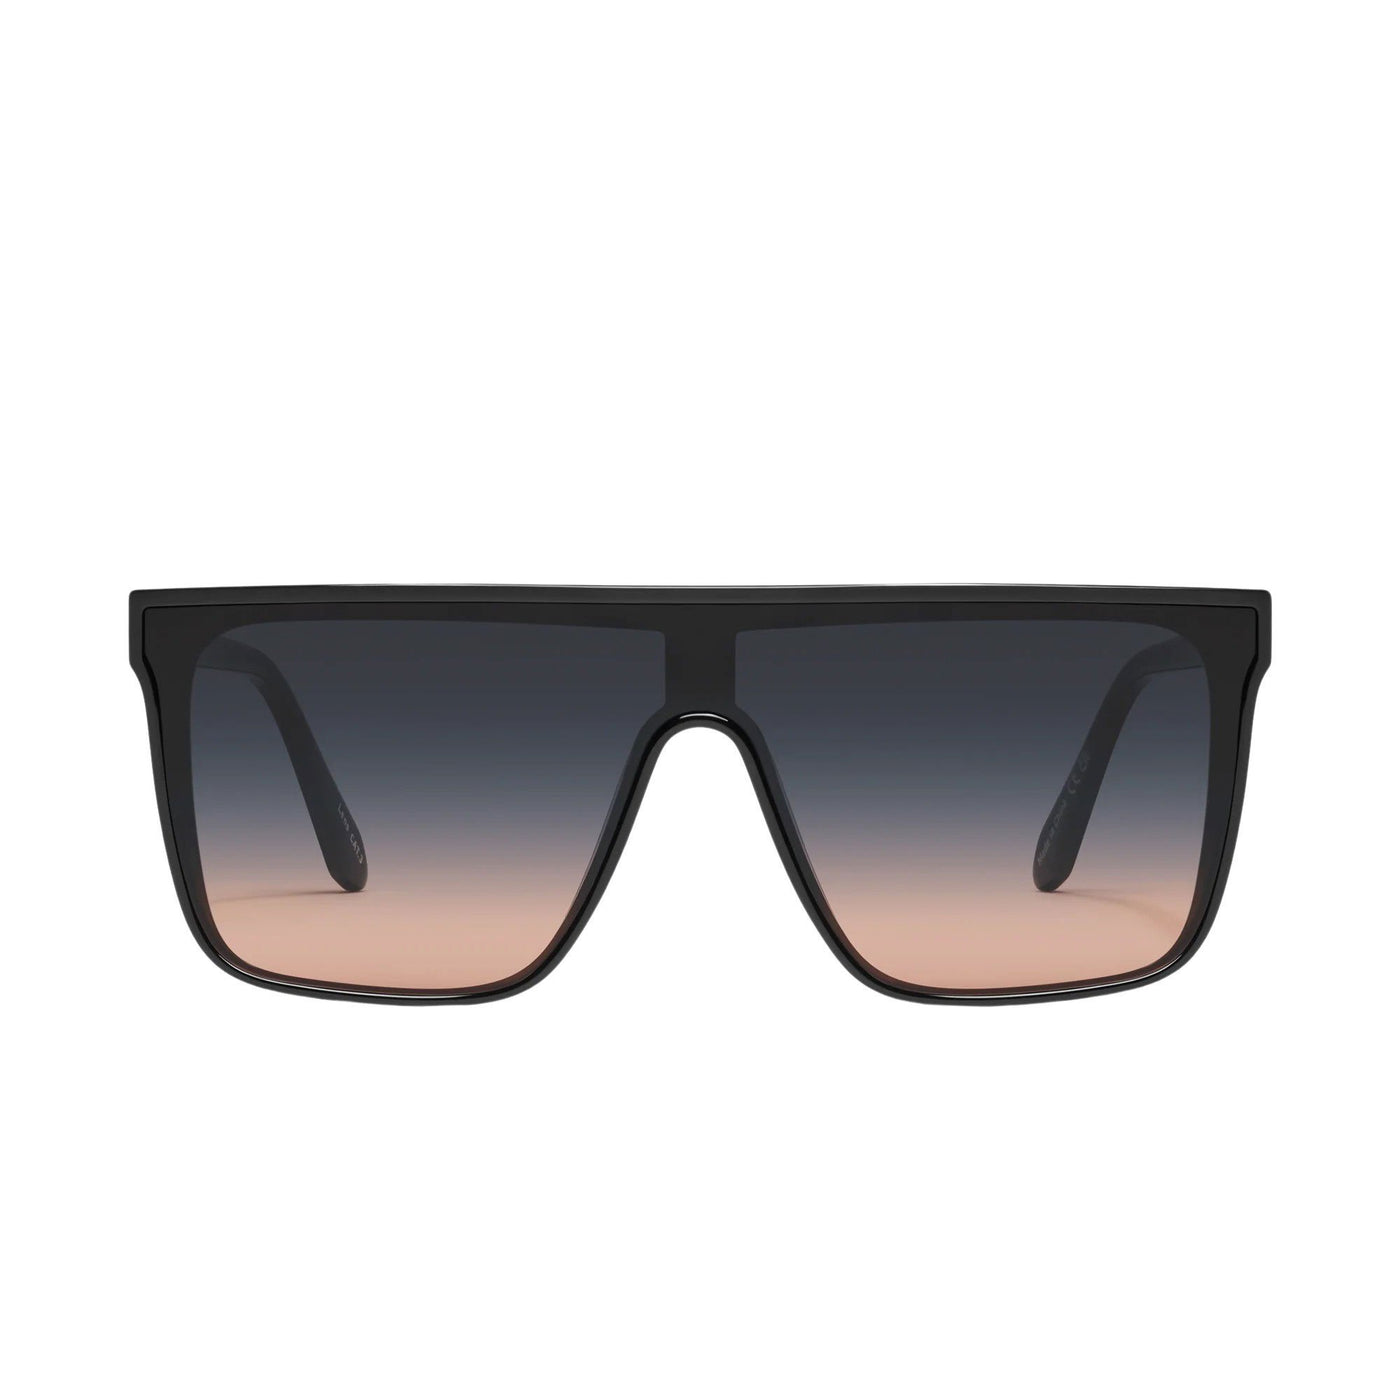 Quay Women's Nightfall Flat Top Shield Sunglasses - Black Frame/Black Fade to Coral Lens - front